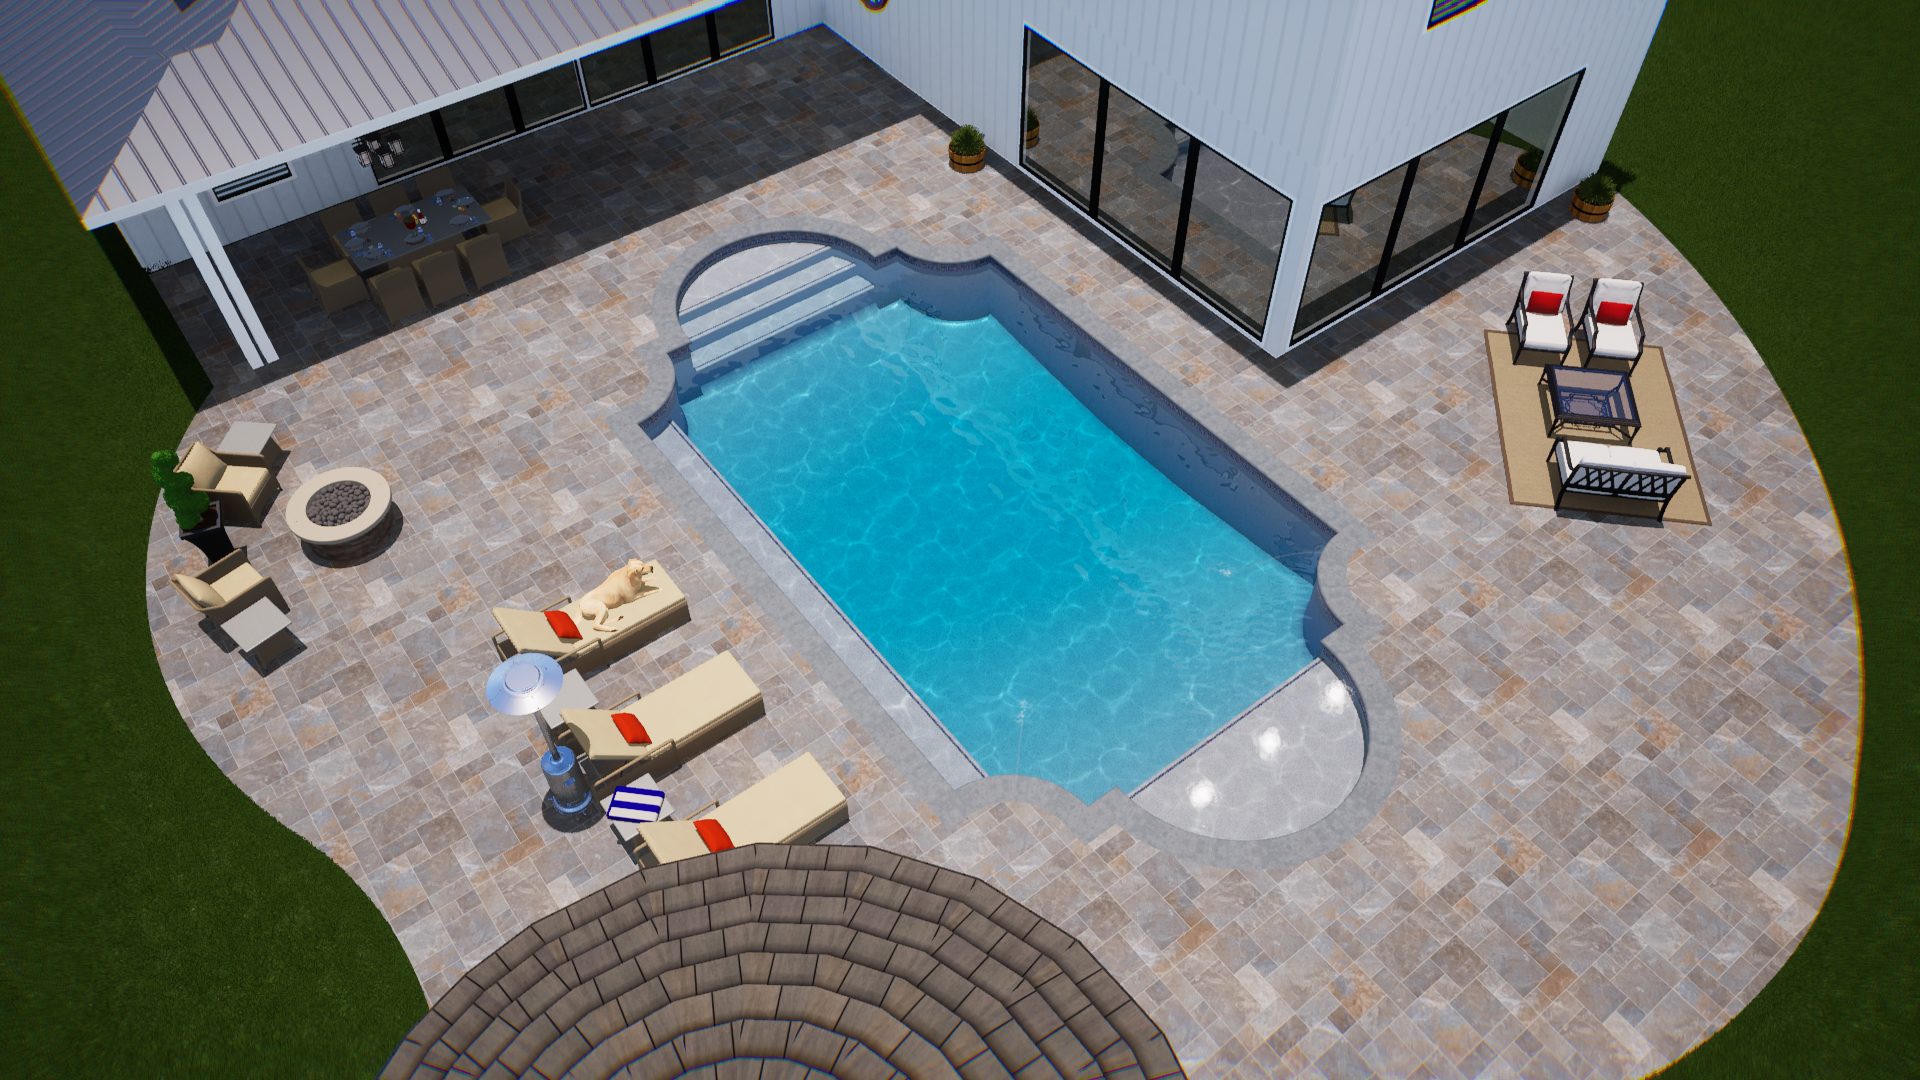 Small Pool Design